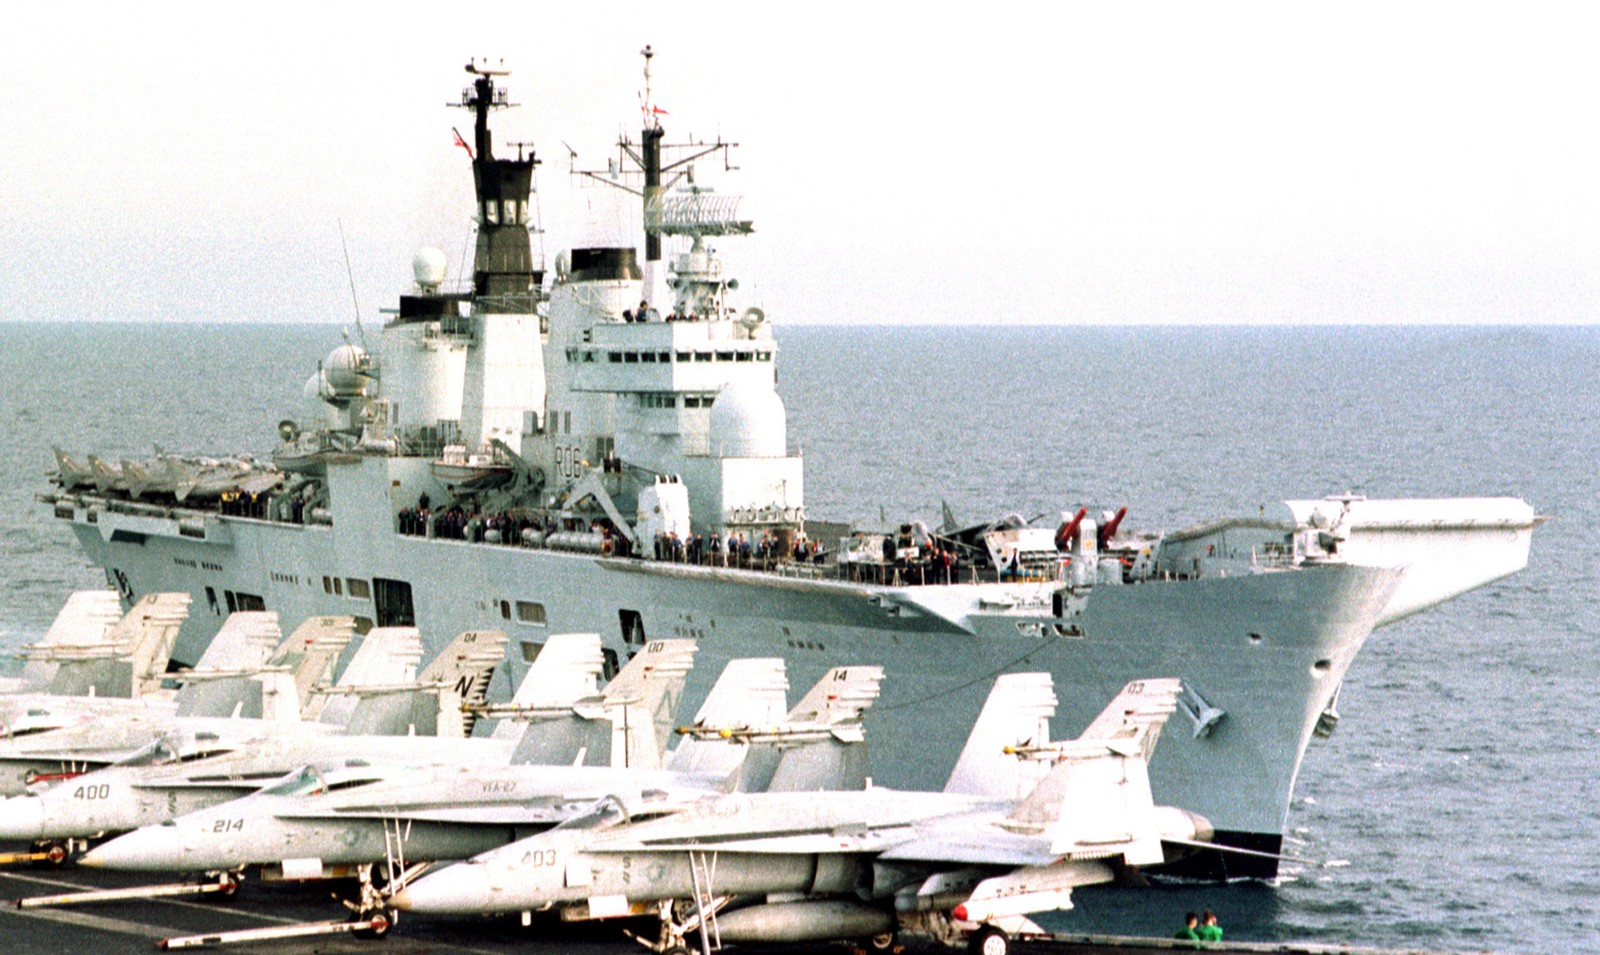 r06 hms illustrious invincible class aircraft carrier royal navy 48